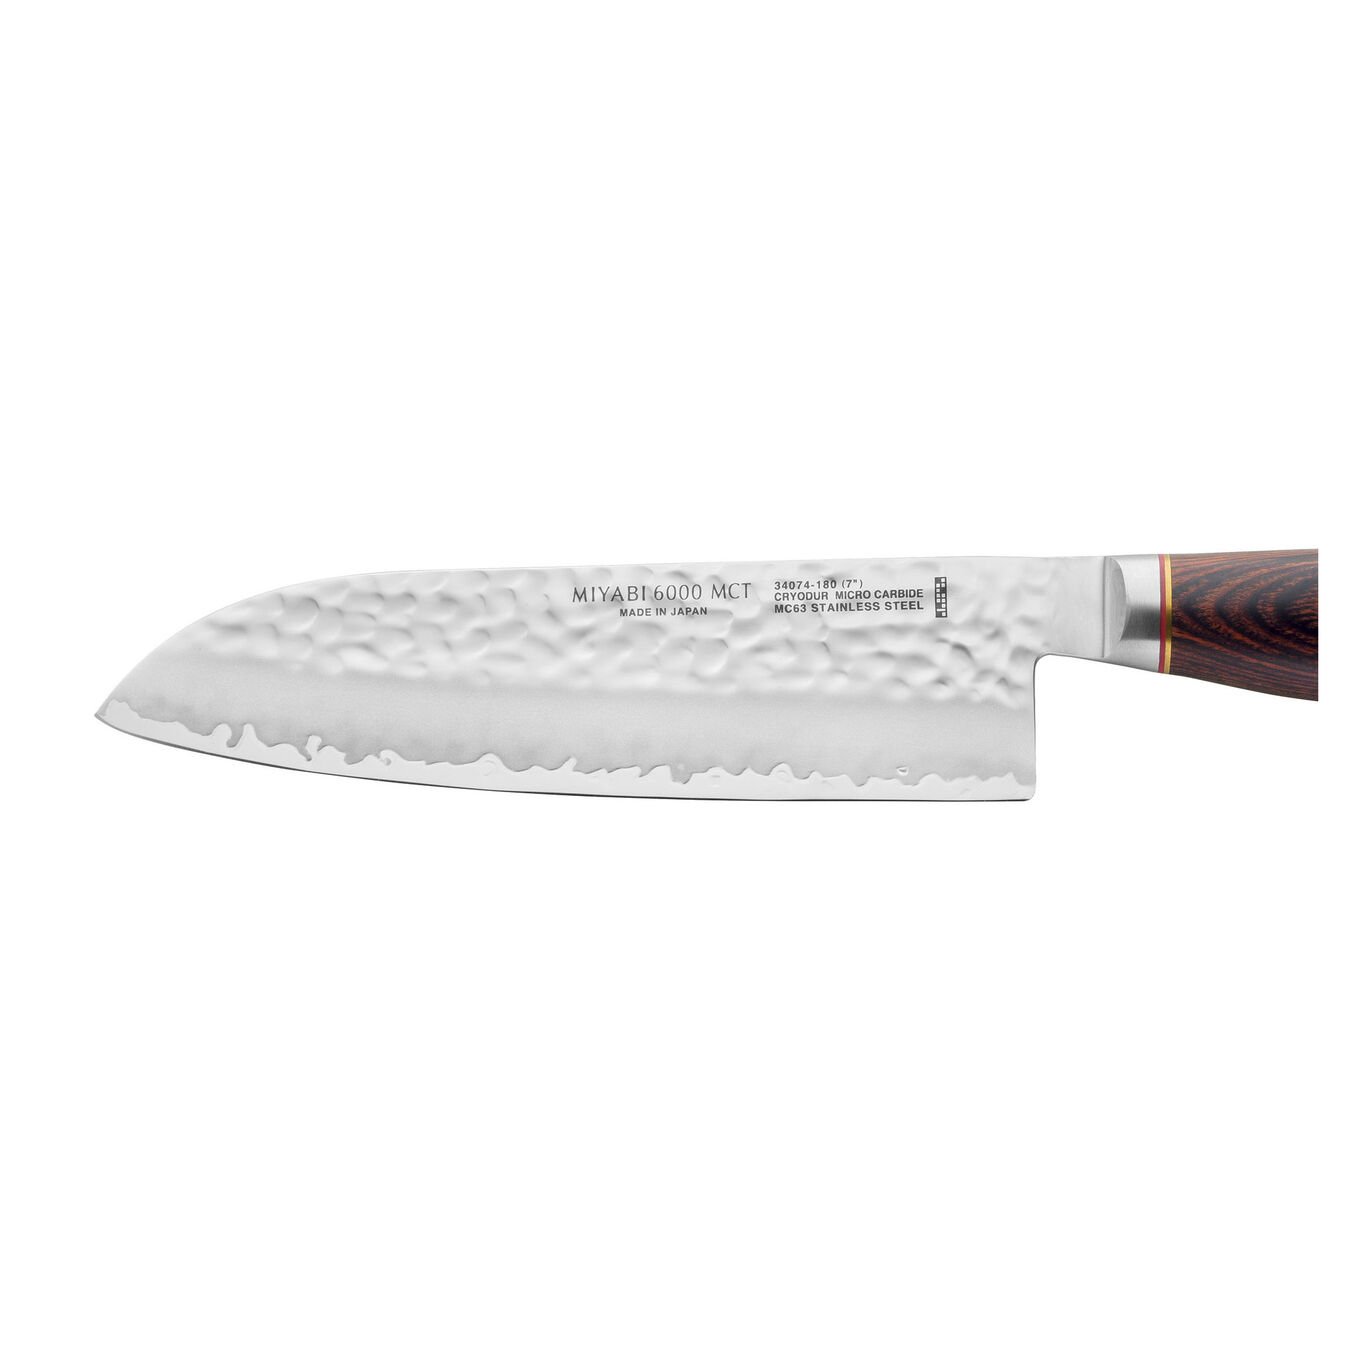 7-inch, Fine Edge Santoku Knife,,large 5